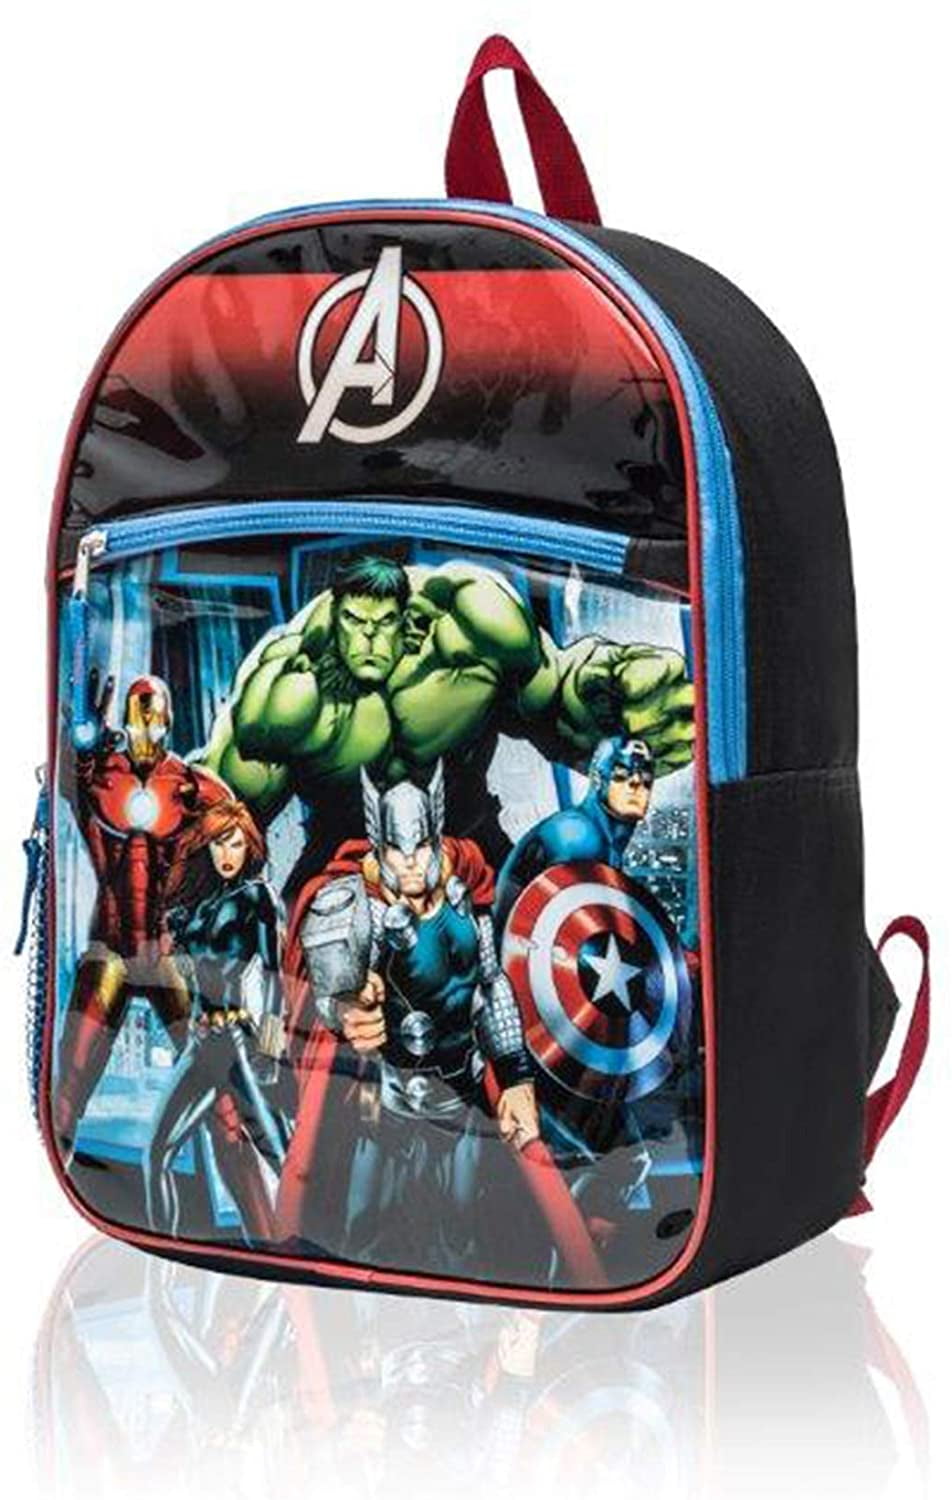 Kids backpack school bag Avengers spiderman Mcqueen cars Batman Starwars 